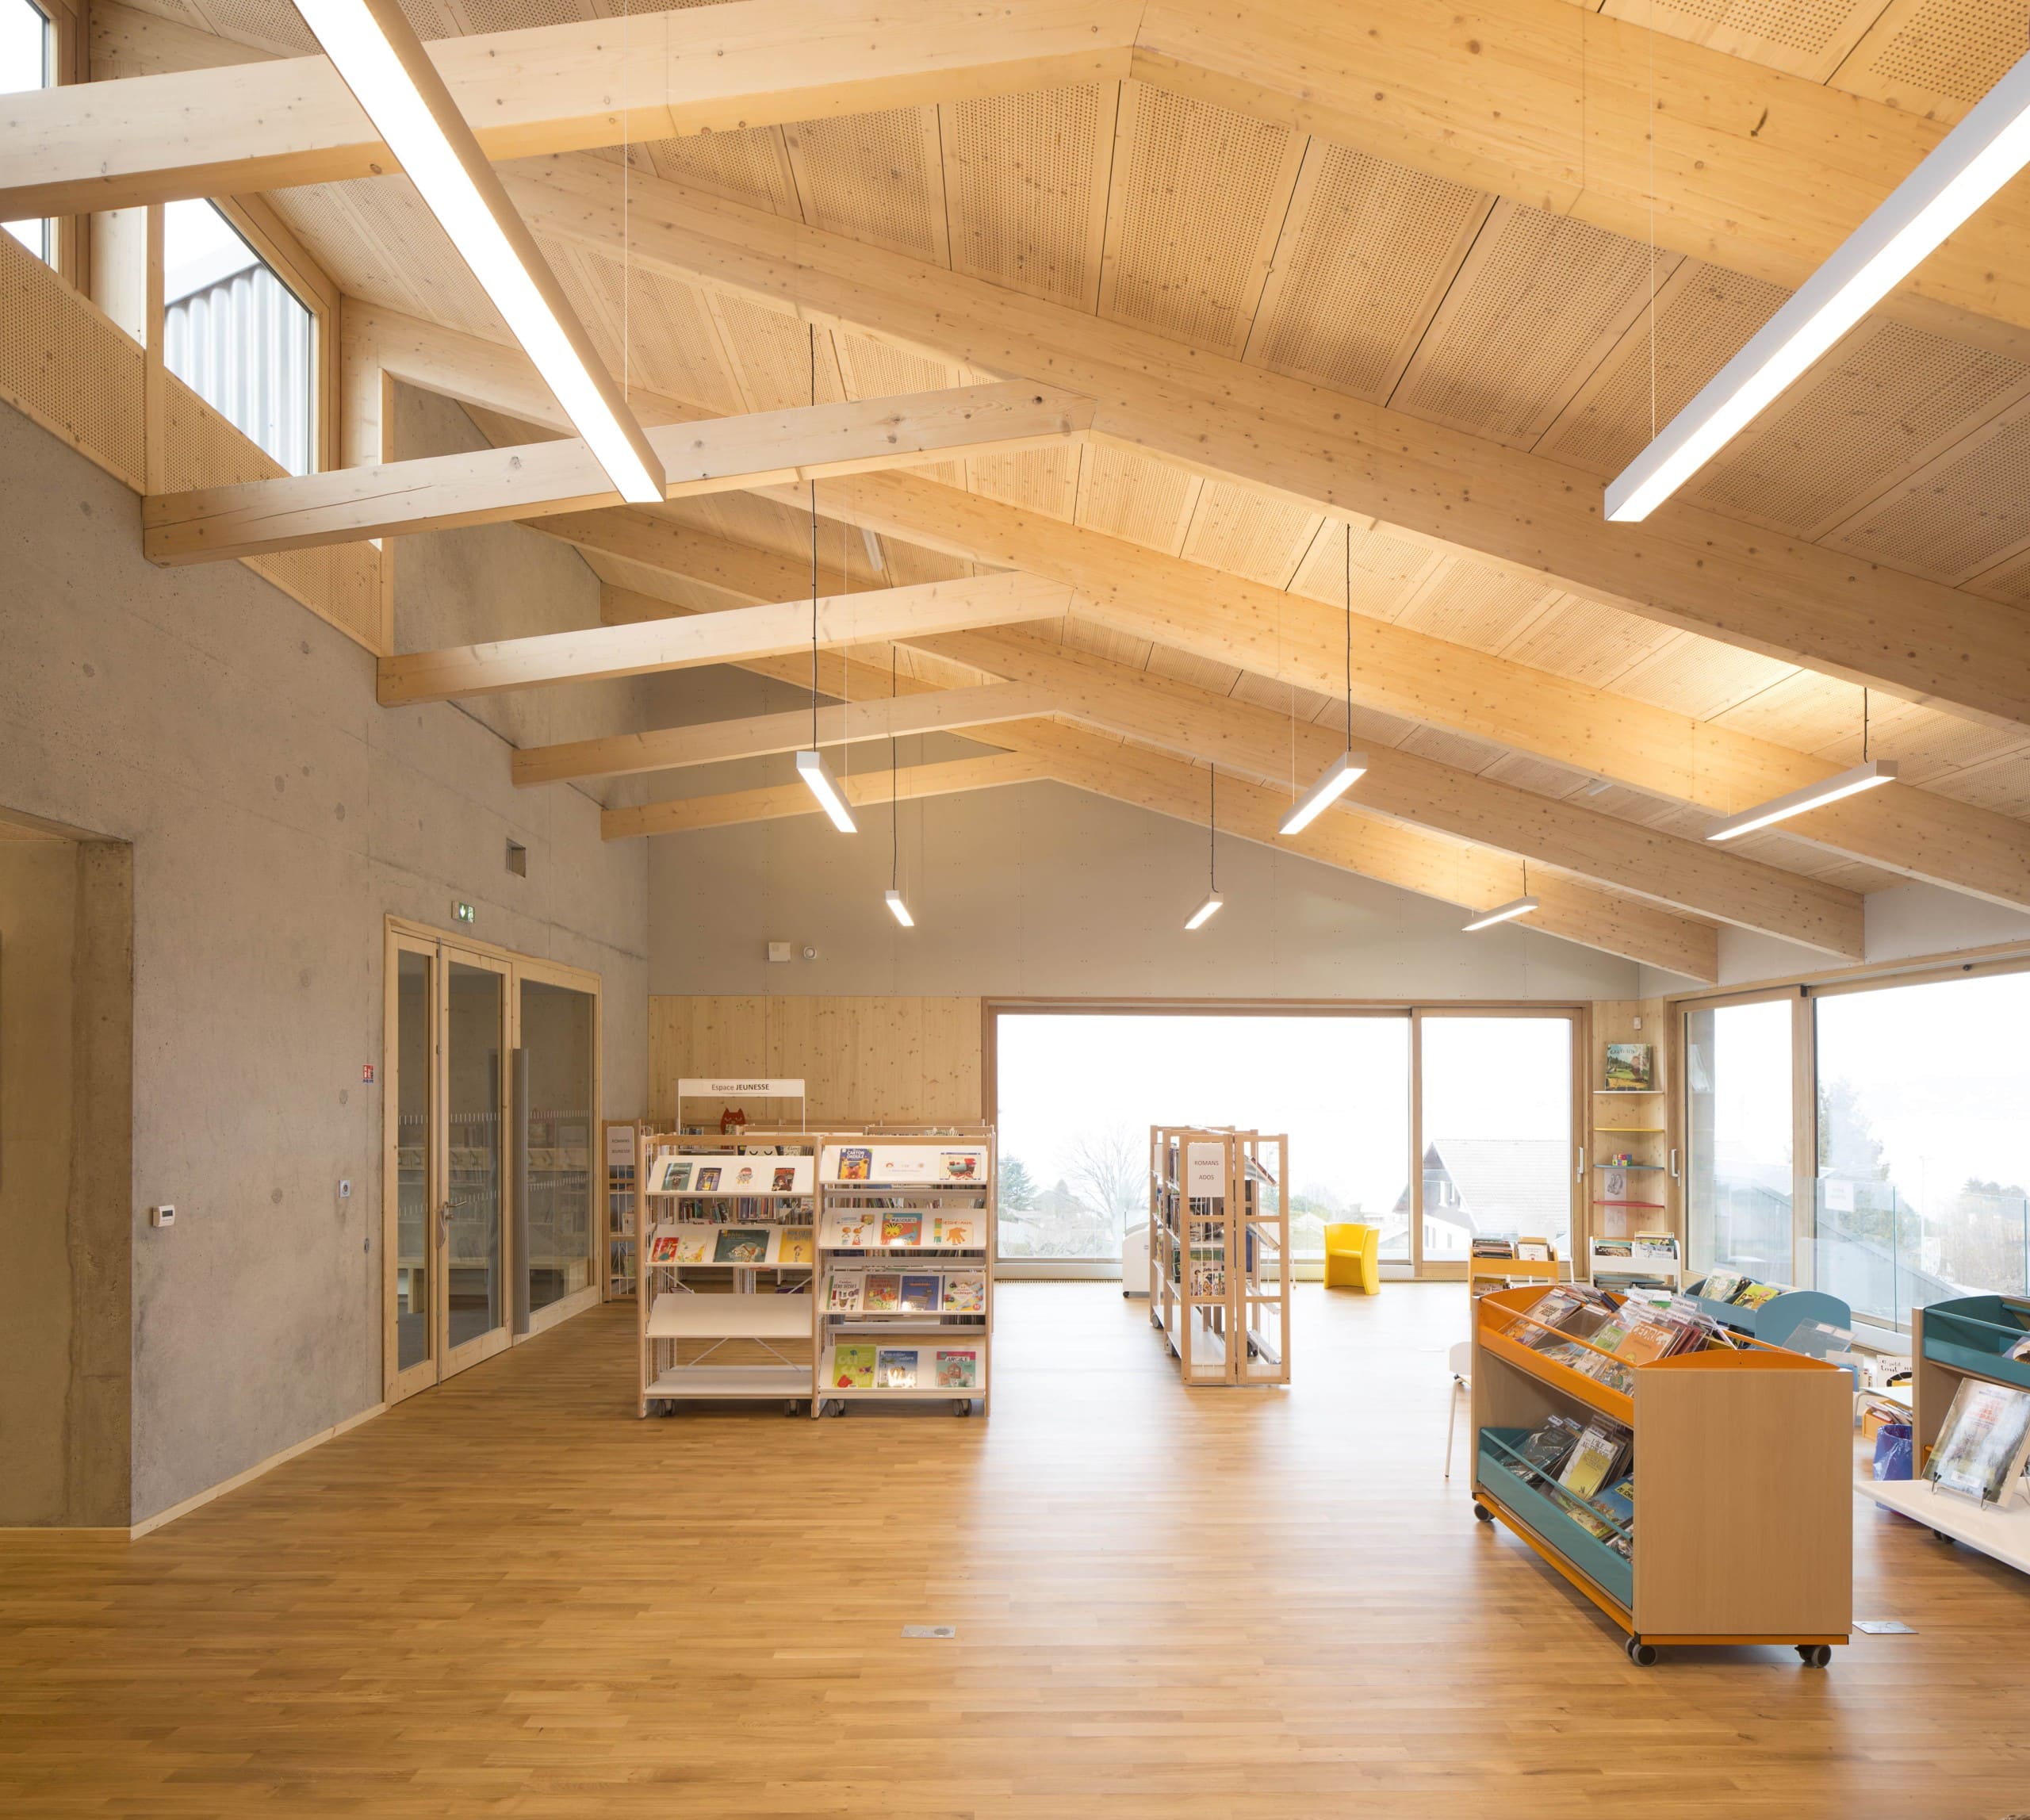 Blick in einen Bibliotheksraum mit Holzdecke, PNG, Julien Boidot, Emilien Robin, Schulzentrum Neuvecelle, Foto: Clément Guillaume